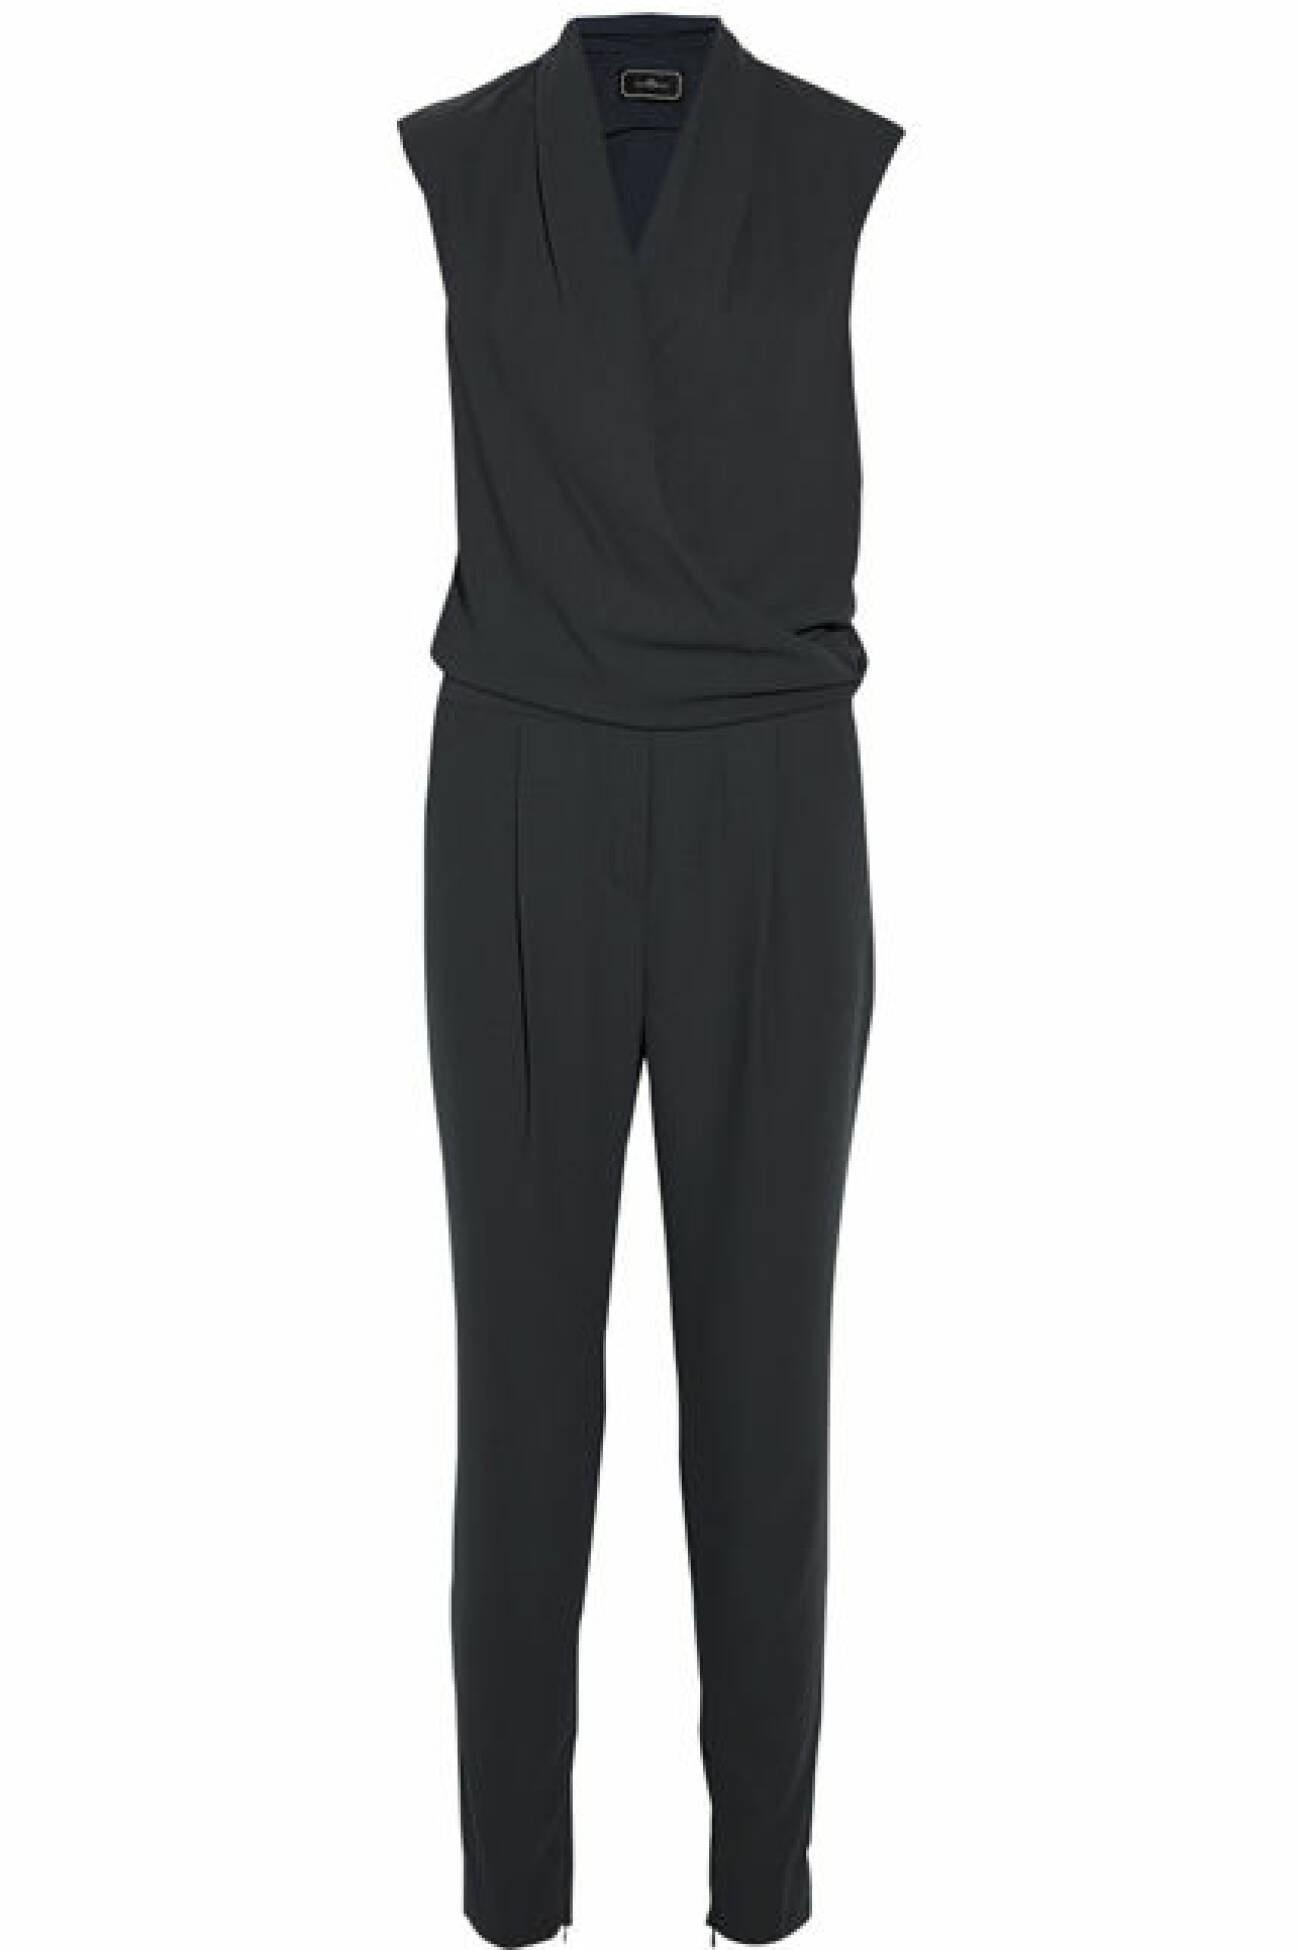 3. Jumpsuit, 2142, kr, By Malene Birger Net-a-porter.com